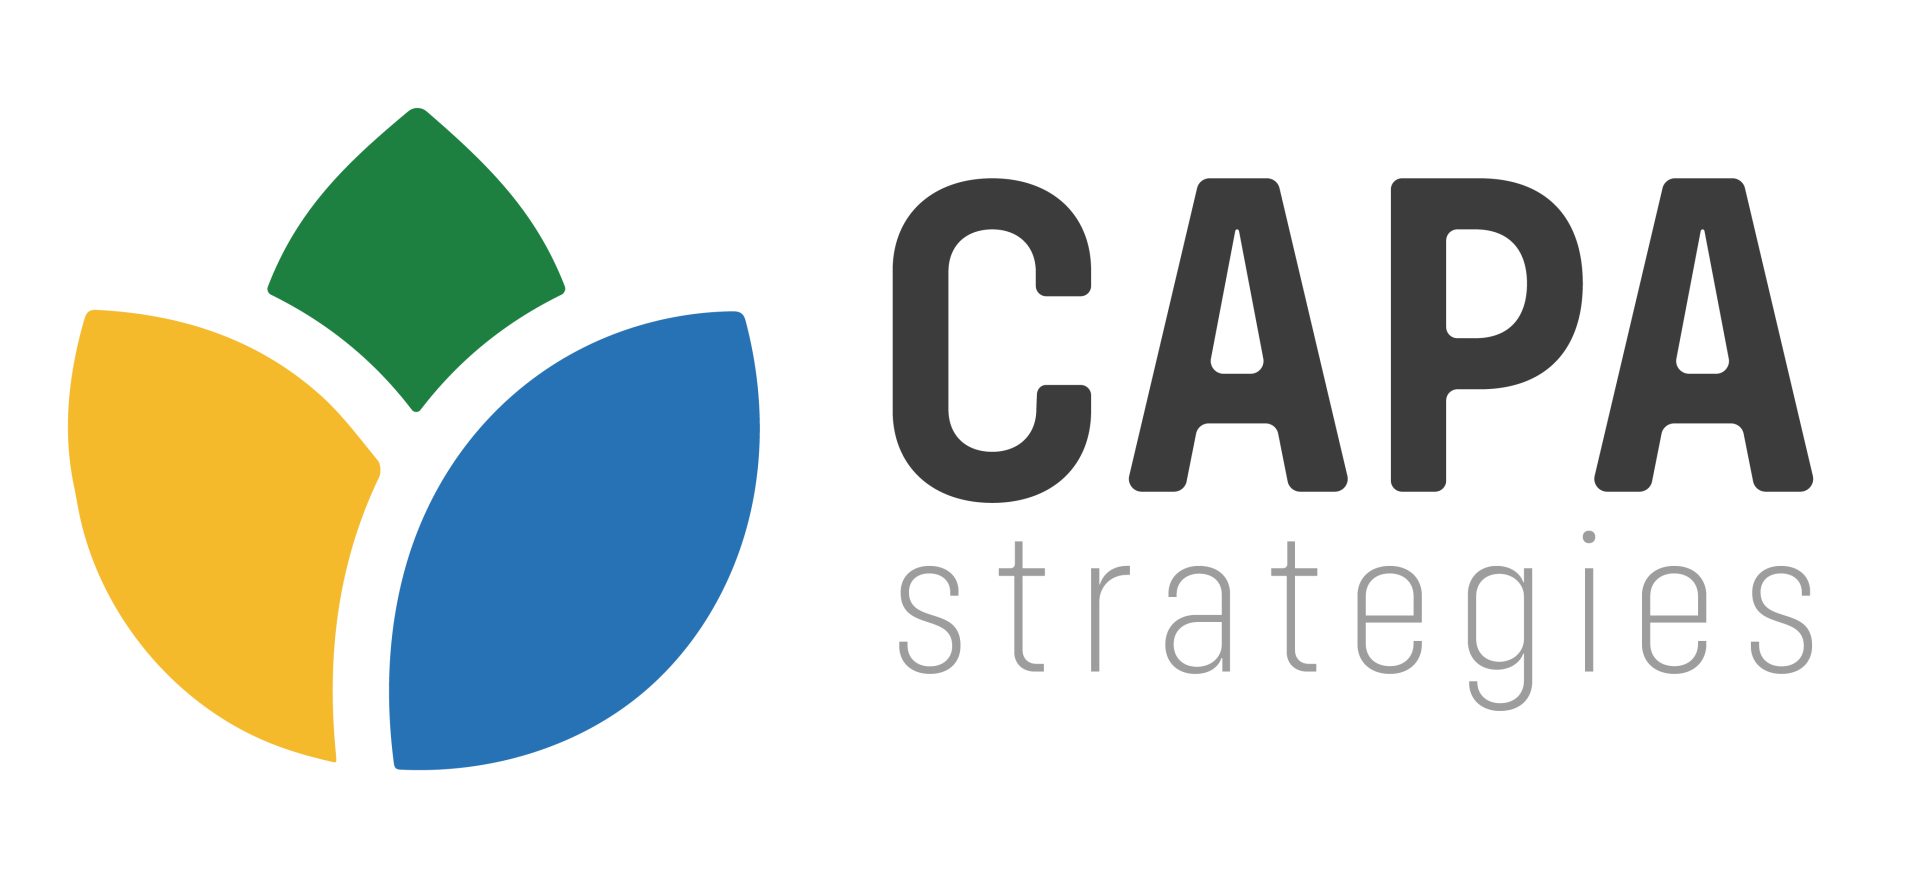 Our Team | CAPA Strategies